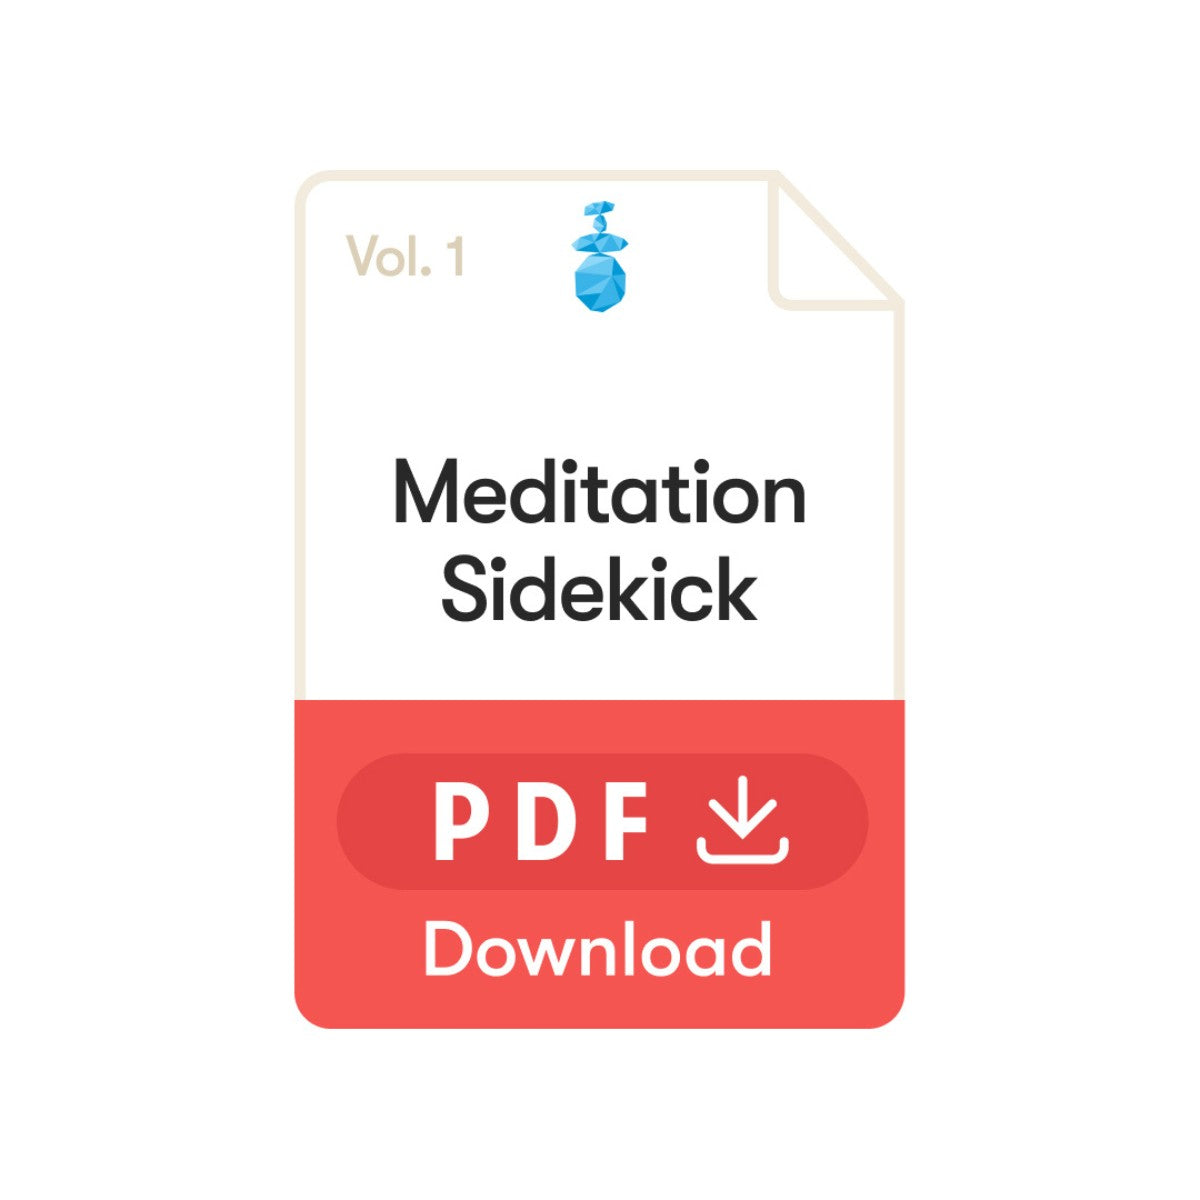 Meditation Sidekick Journal